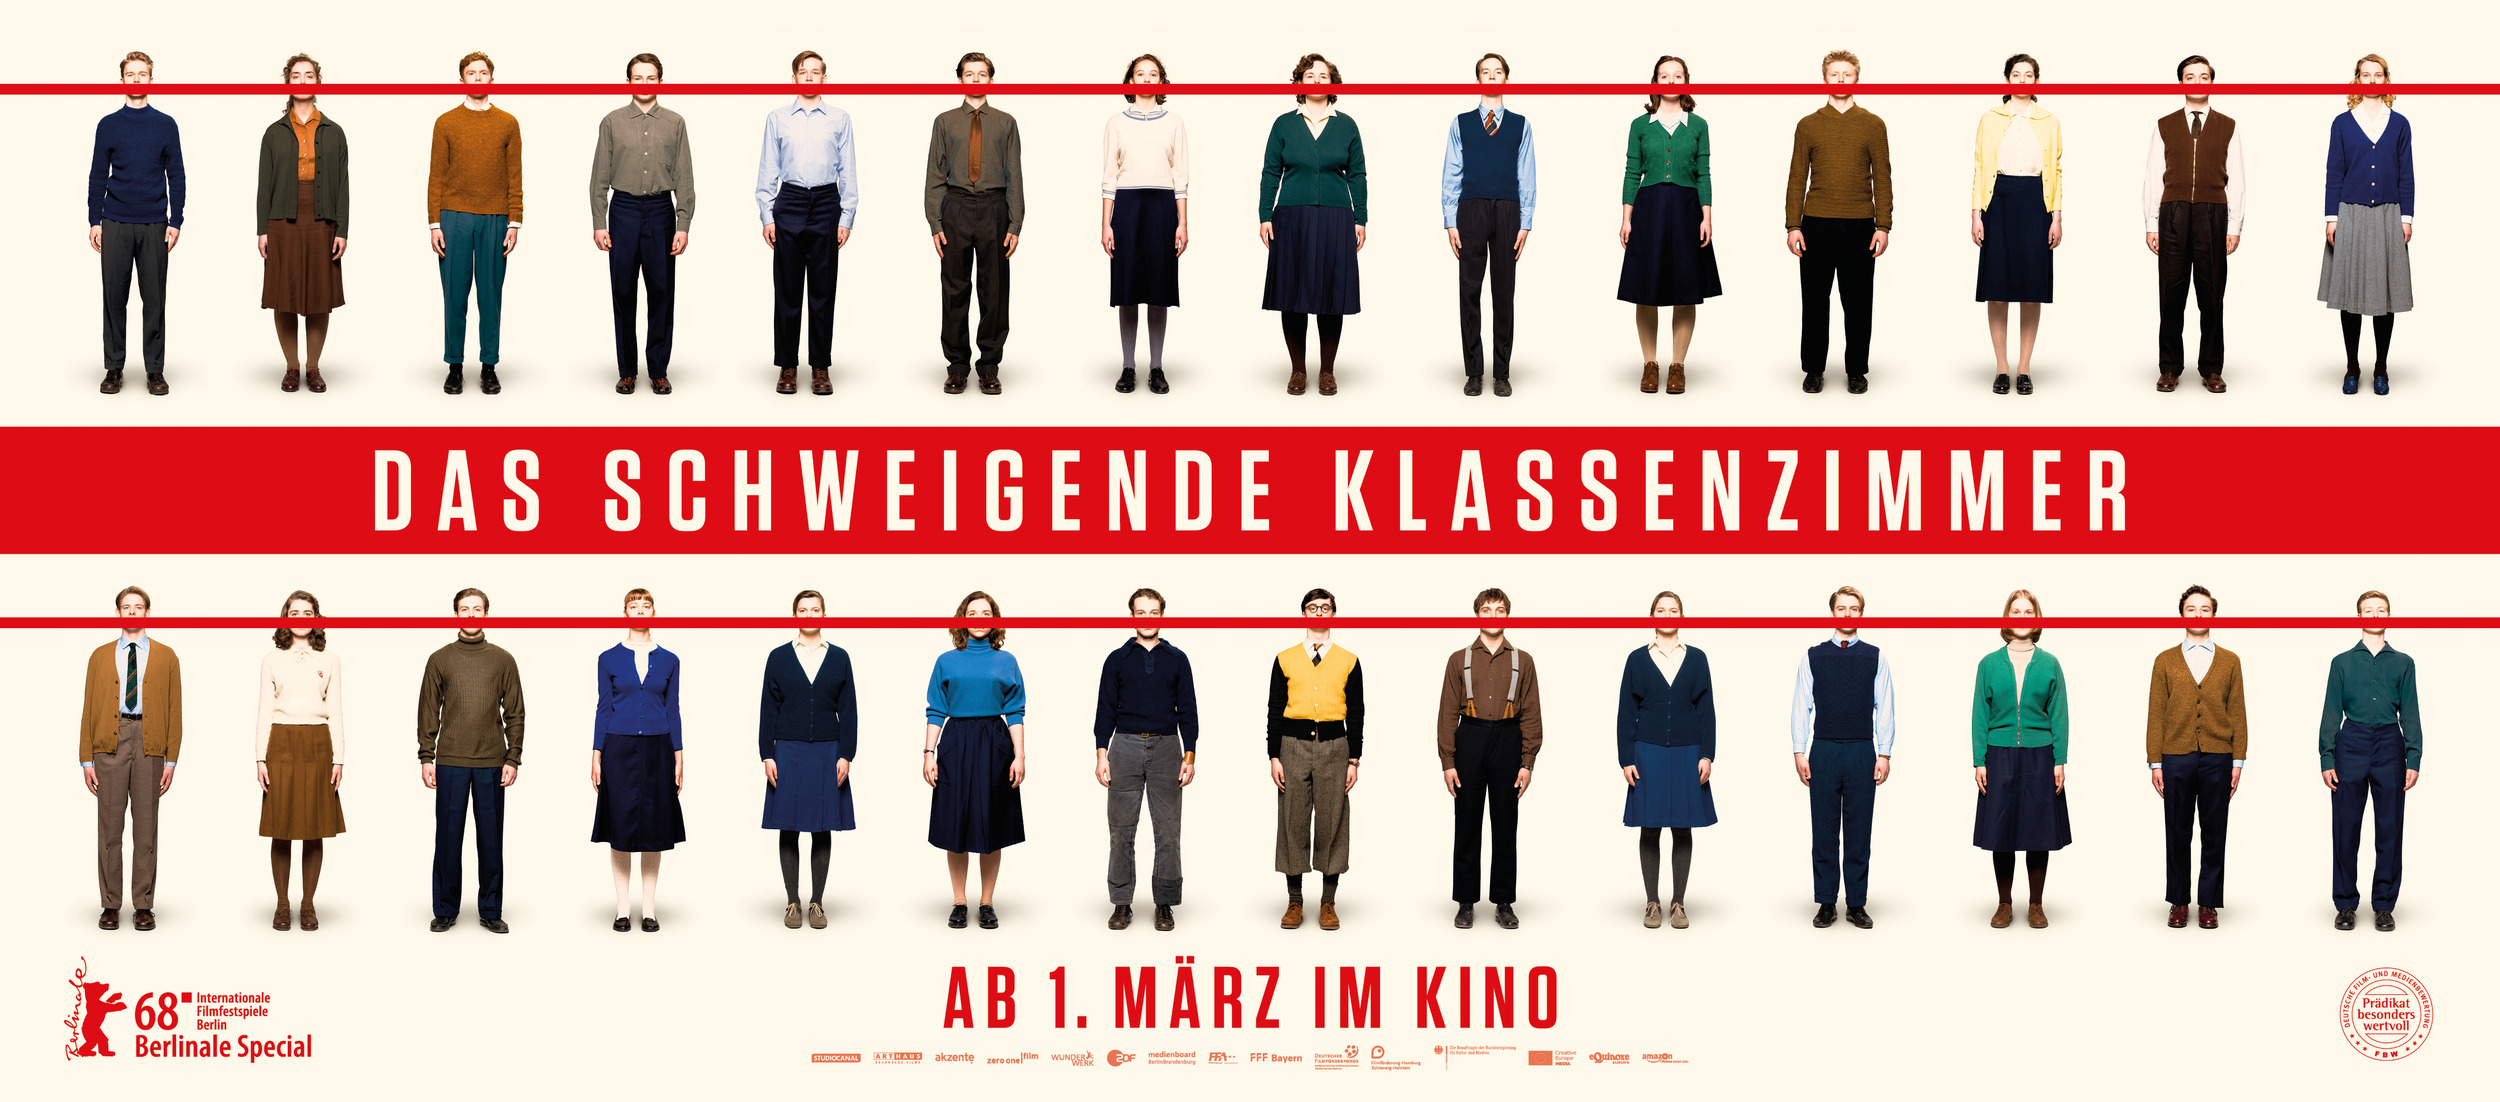 Mega Sized Movie Poster Image for Das schweigende Klassenzimmer (#2 of 7)